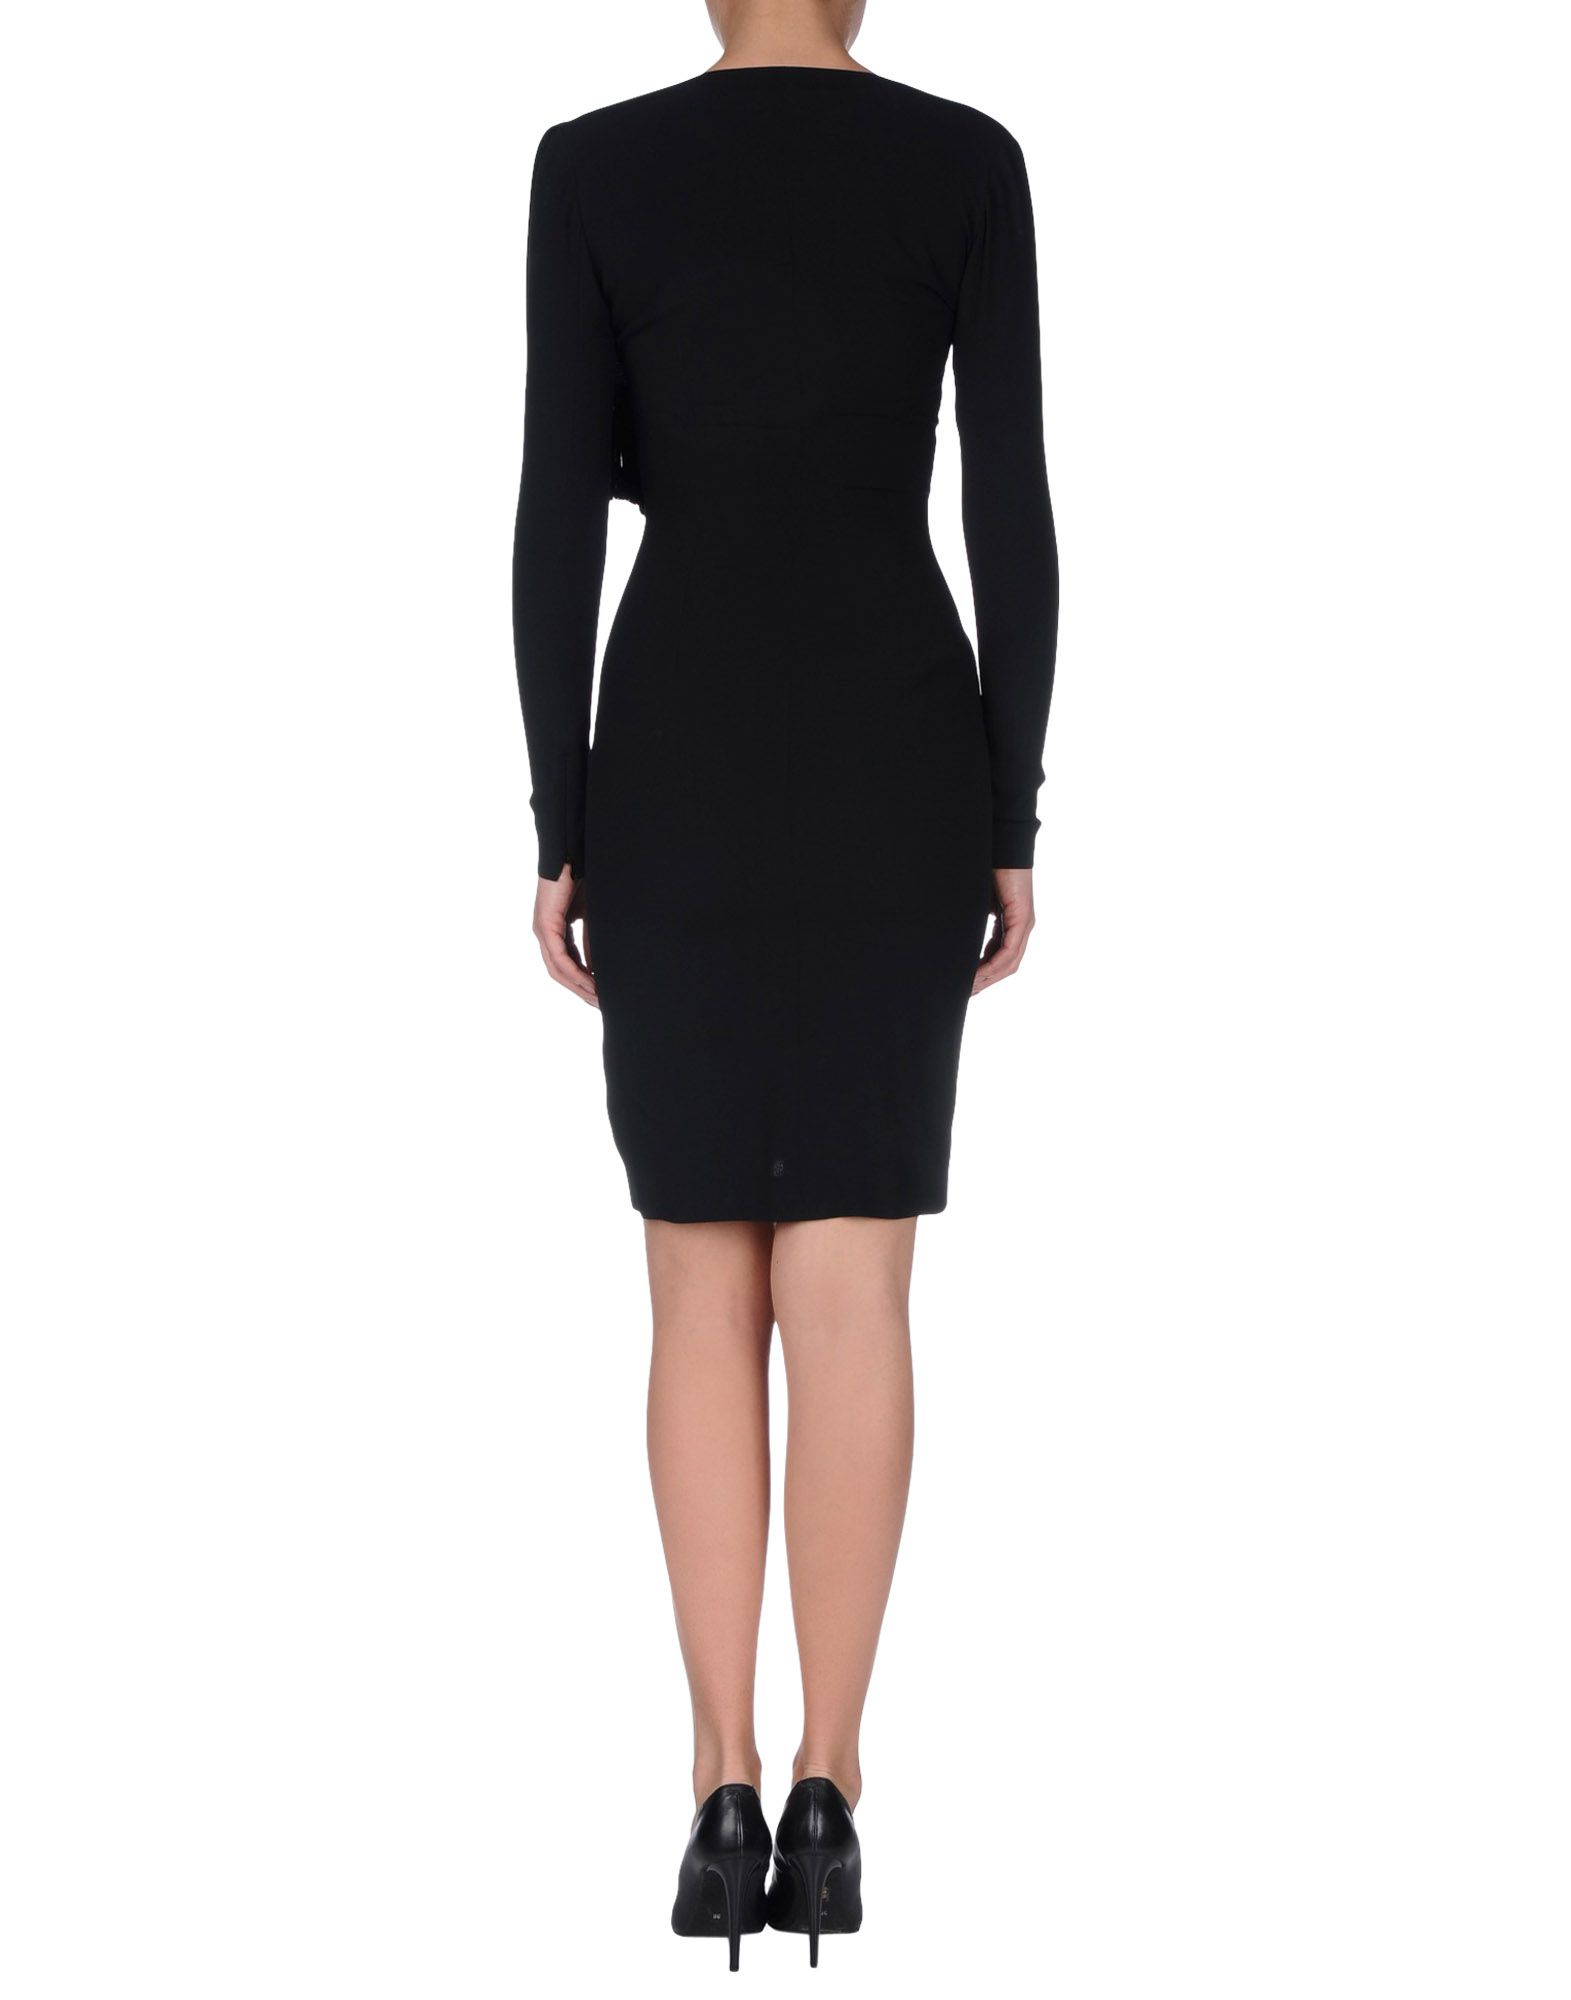 Lyst - Stella Mccartney Knee-length Dress in Black